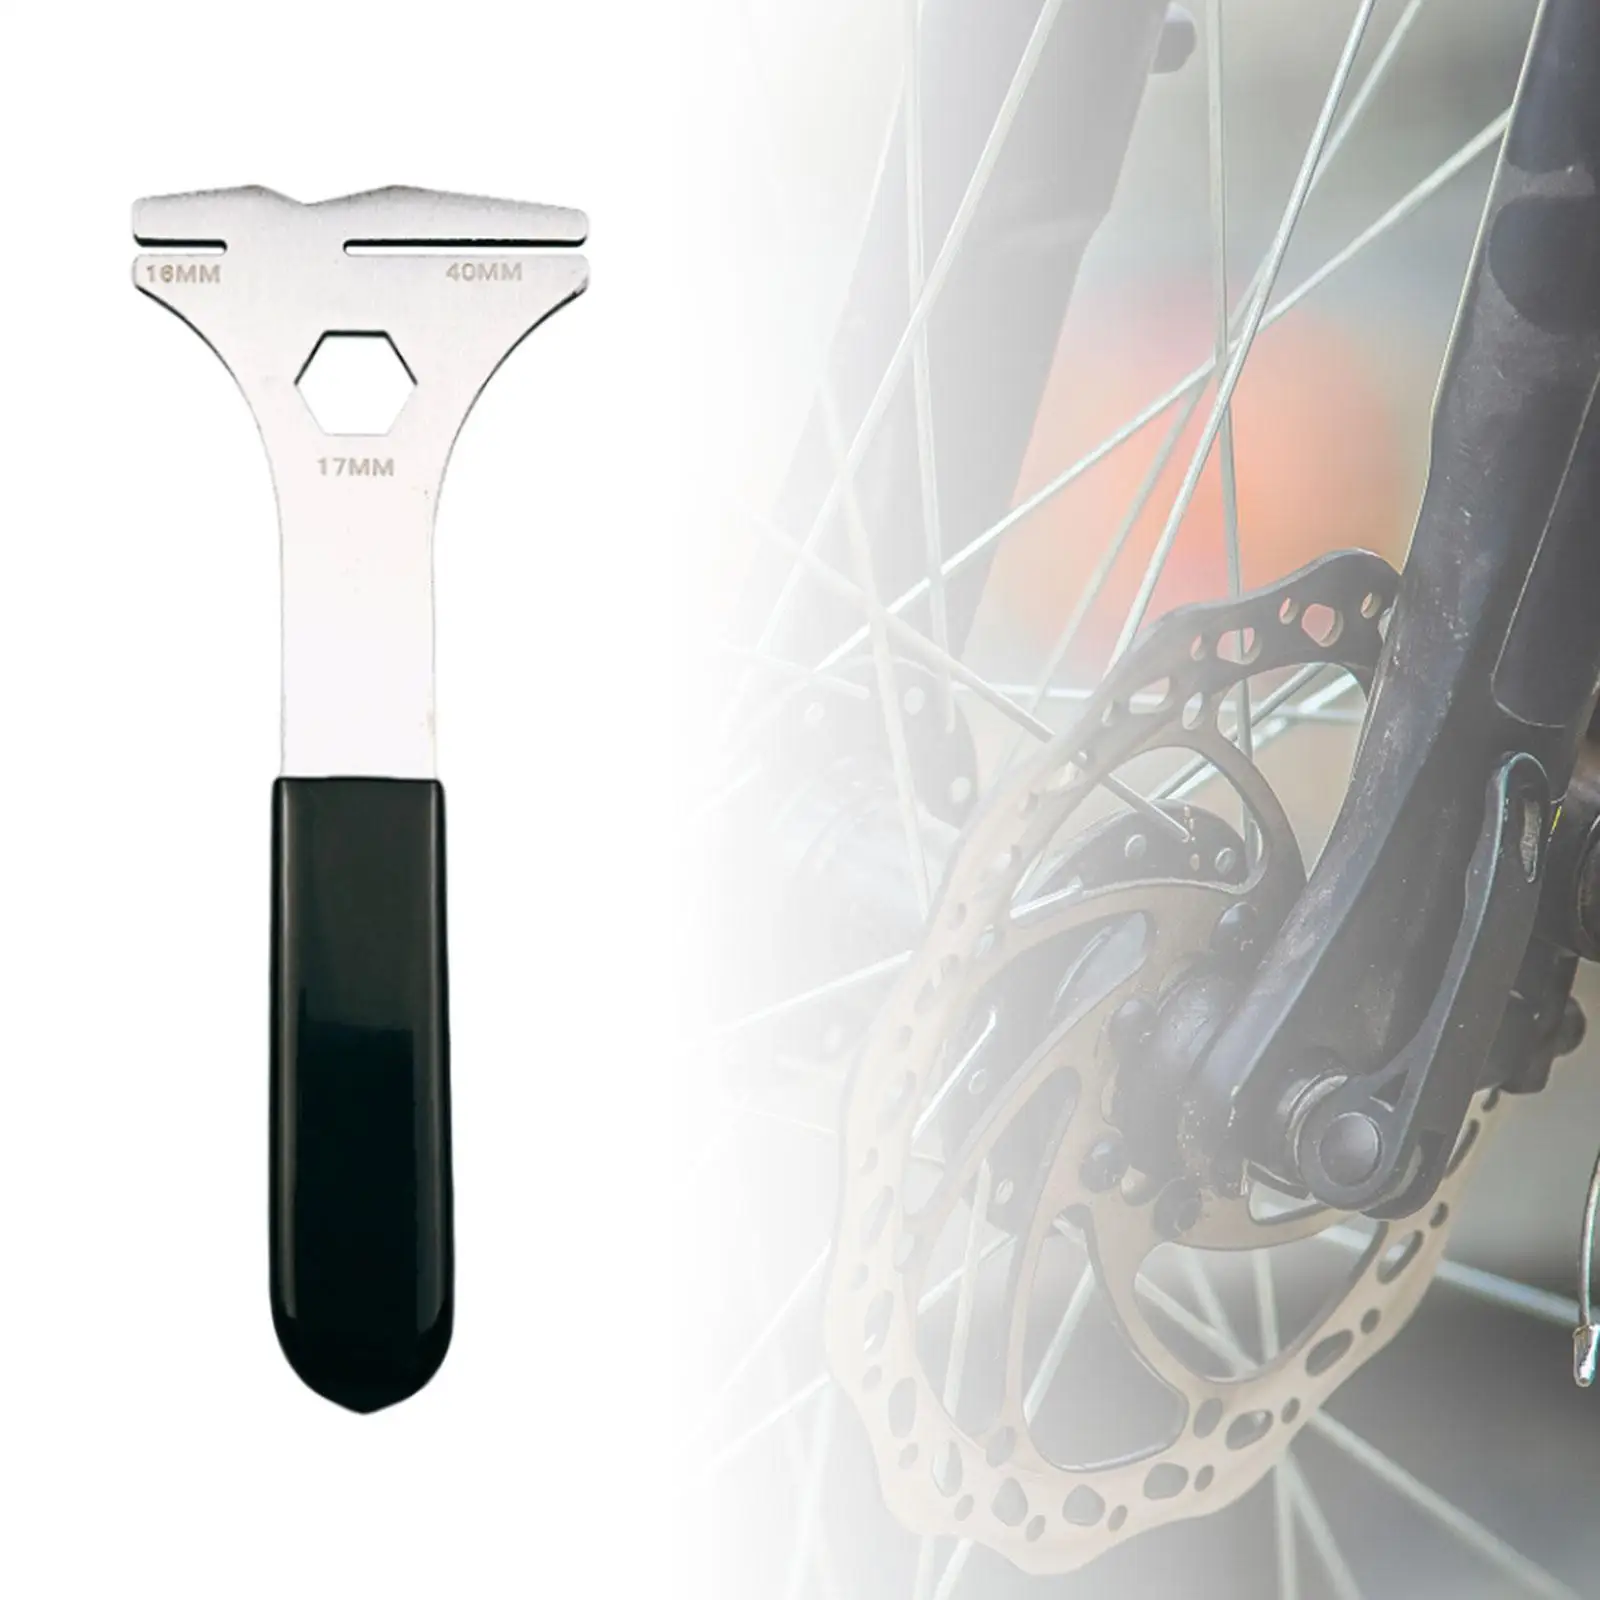 Bike Disc Rotor Alignment Tool Reliable for Road Bike Mountain Bike Aligning